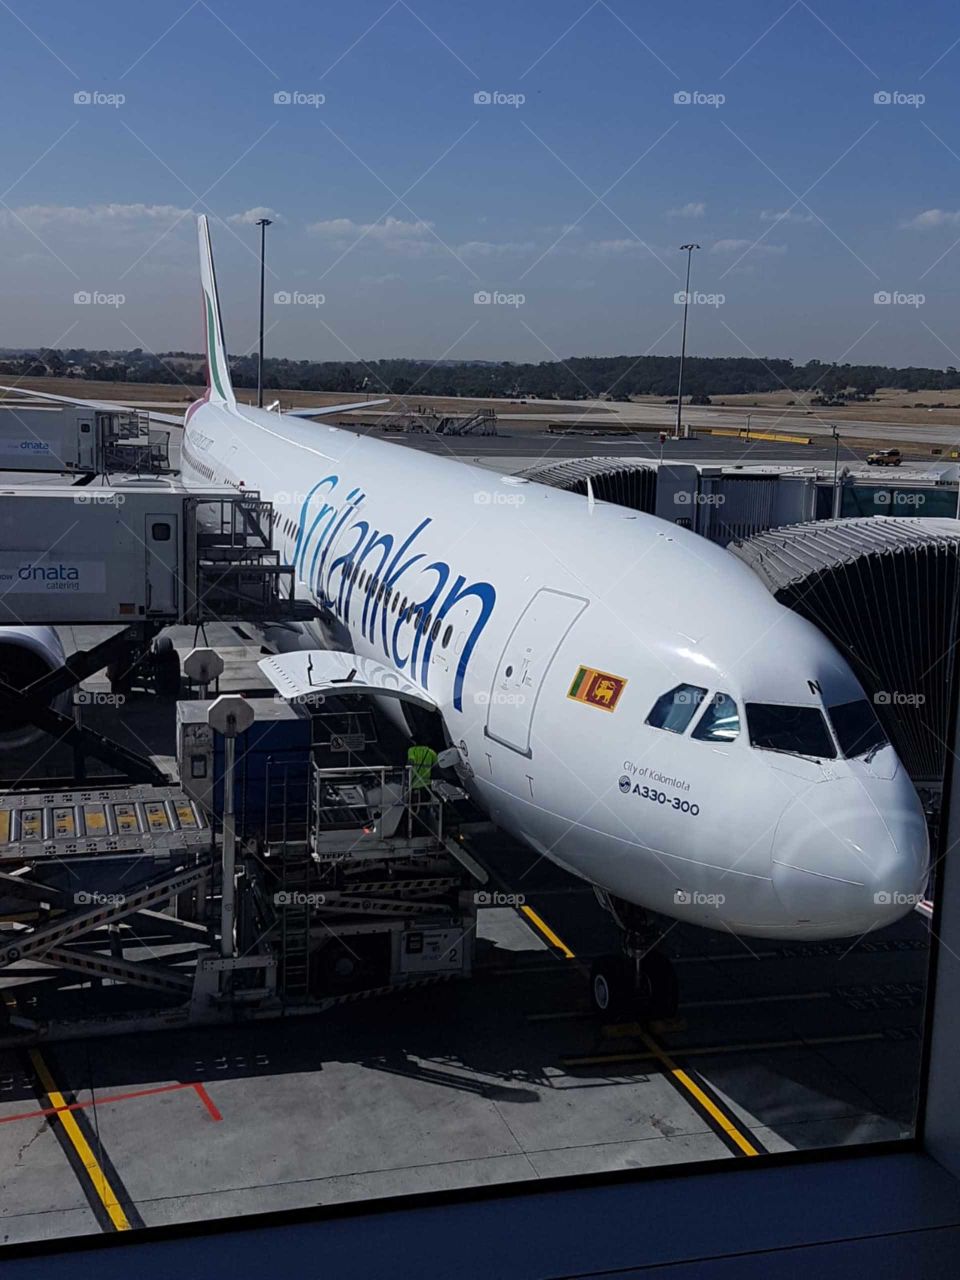 Sri lankan airlines (colombo to australia)